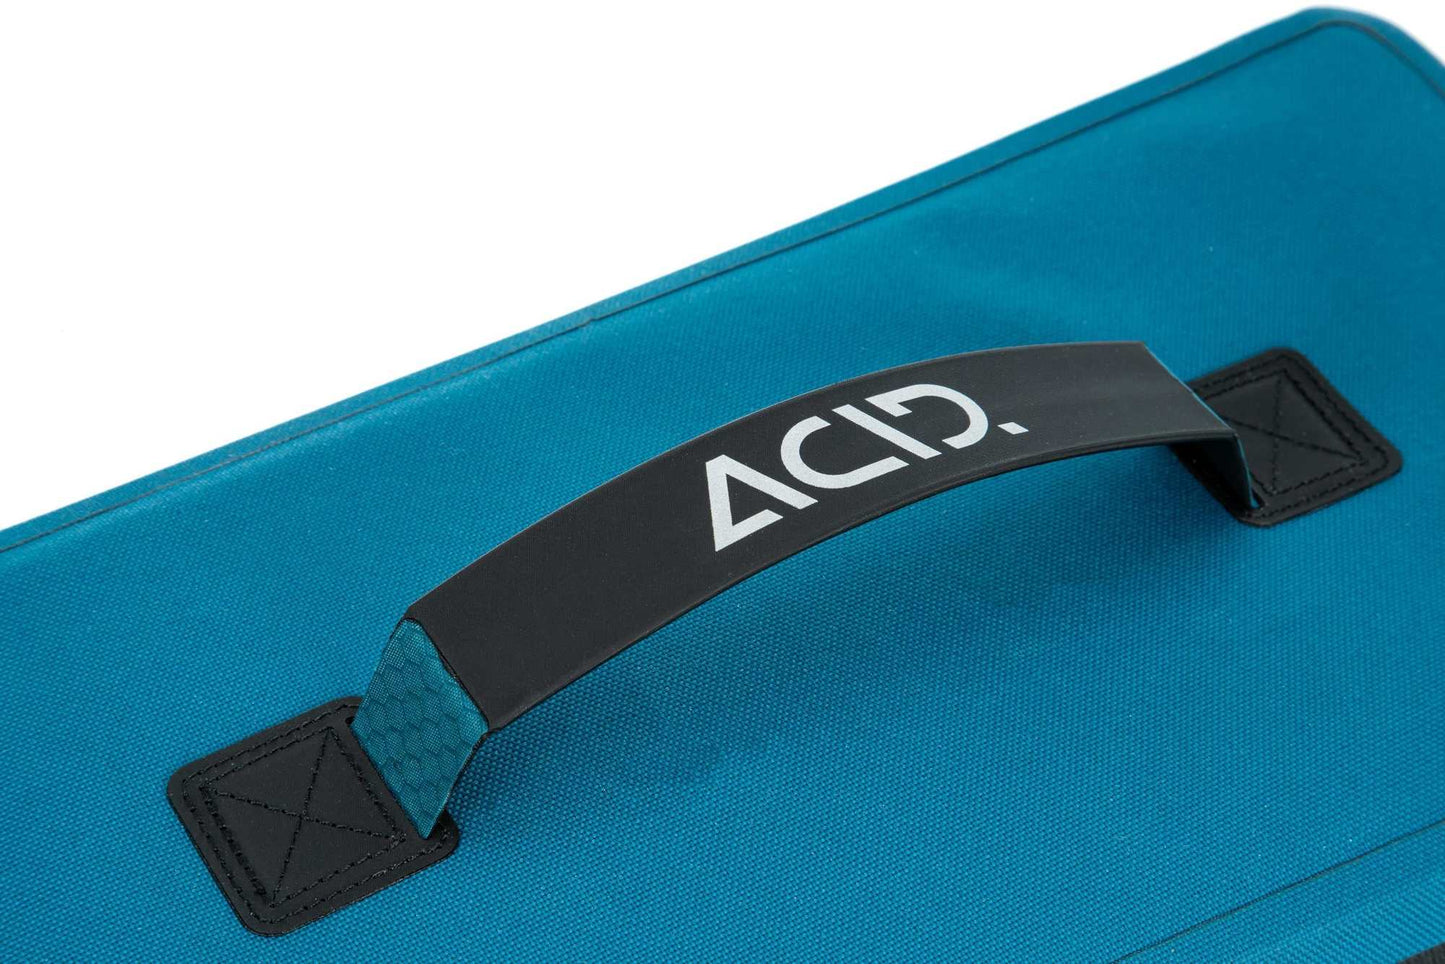 ACID Trunk Bag Pro 10 Rilink Dark Blue/Black